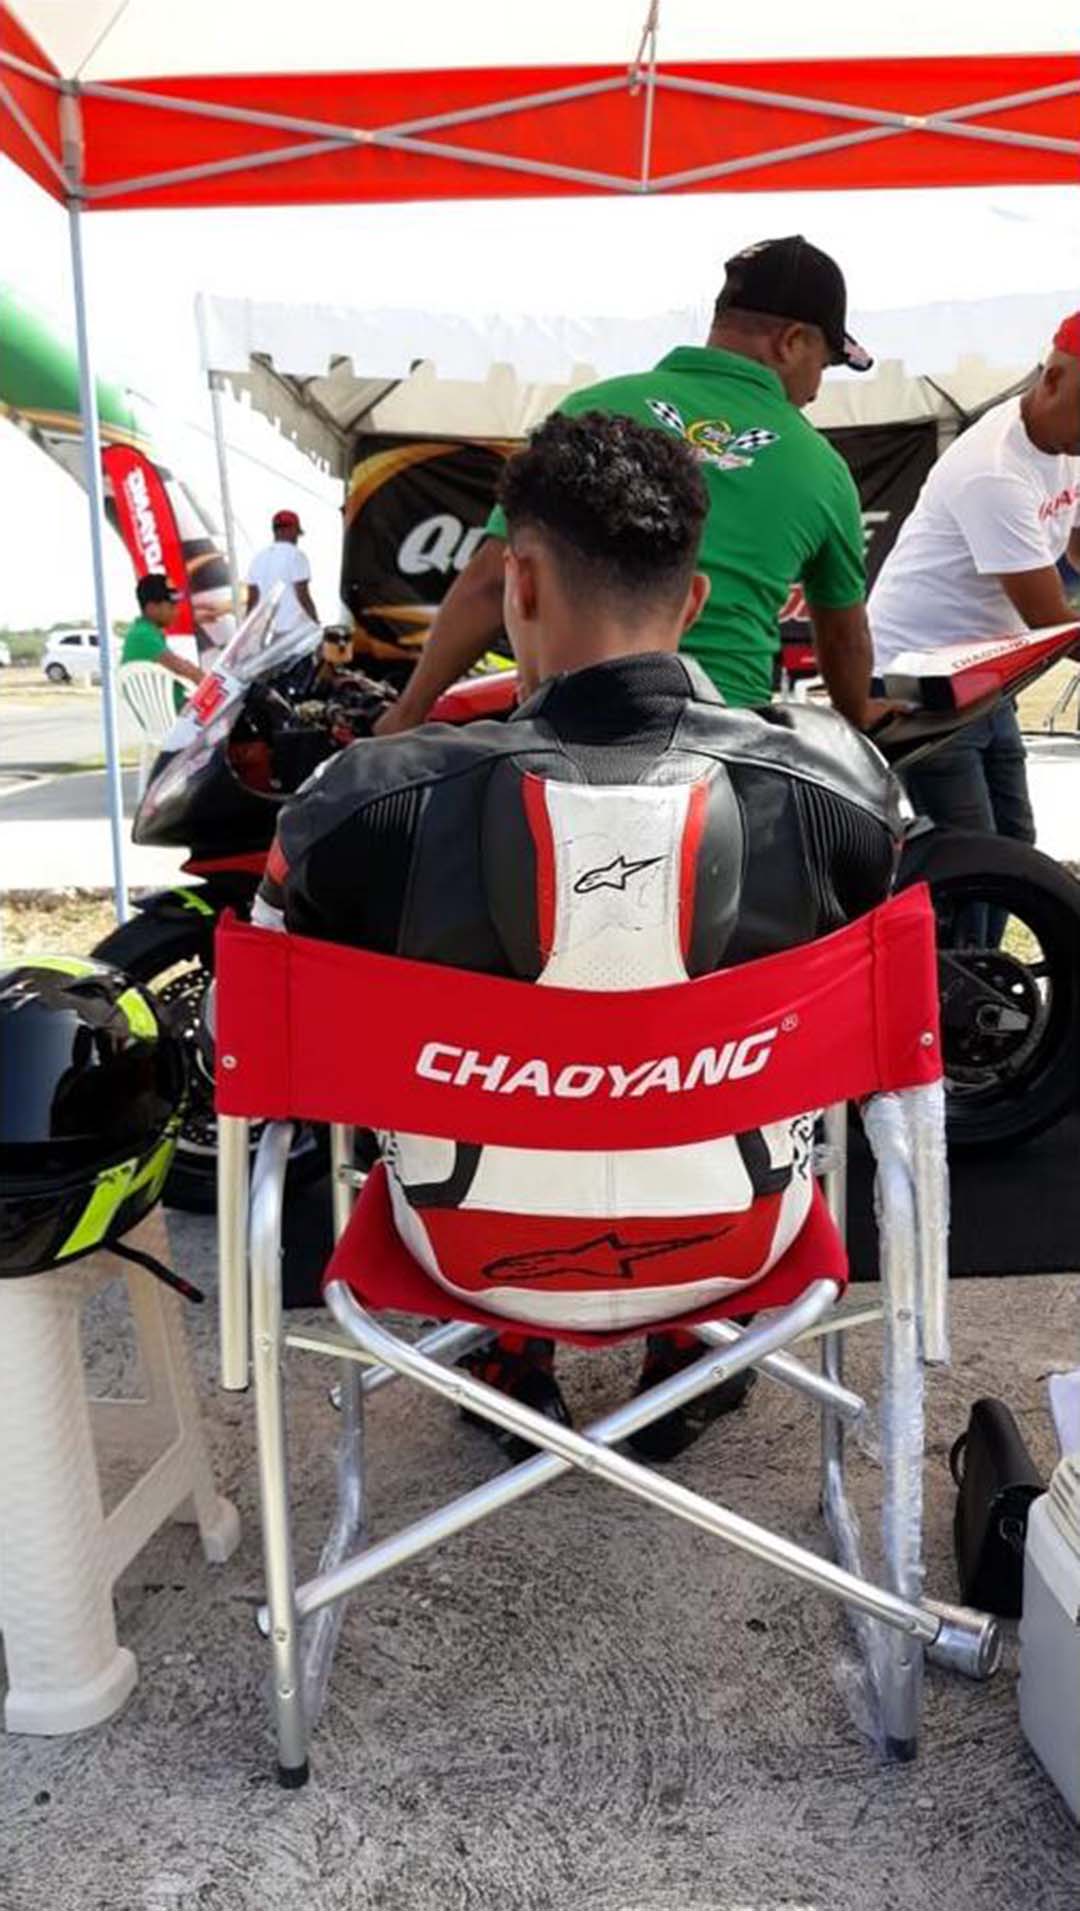 2018 Dominican MK race